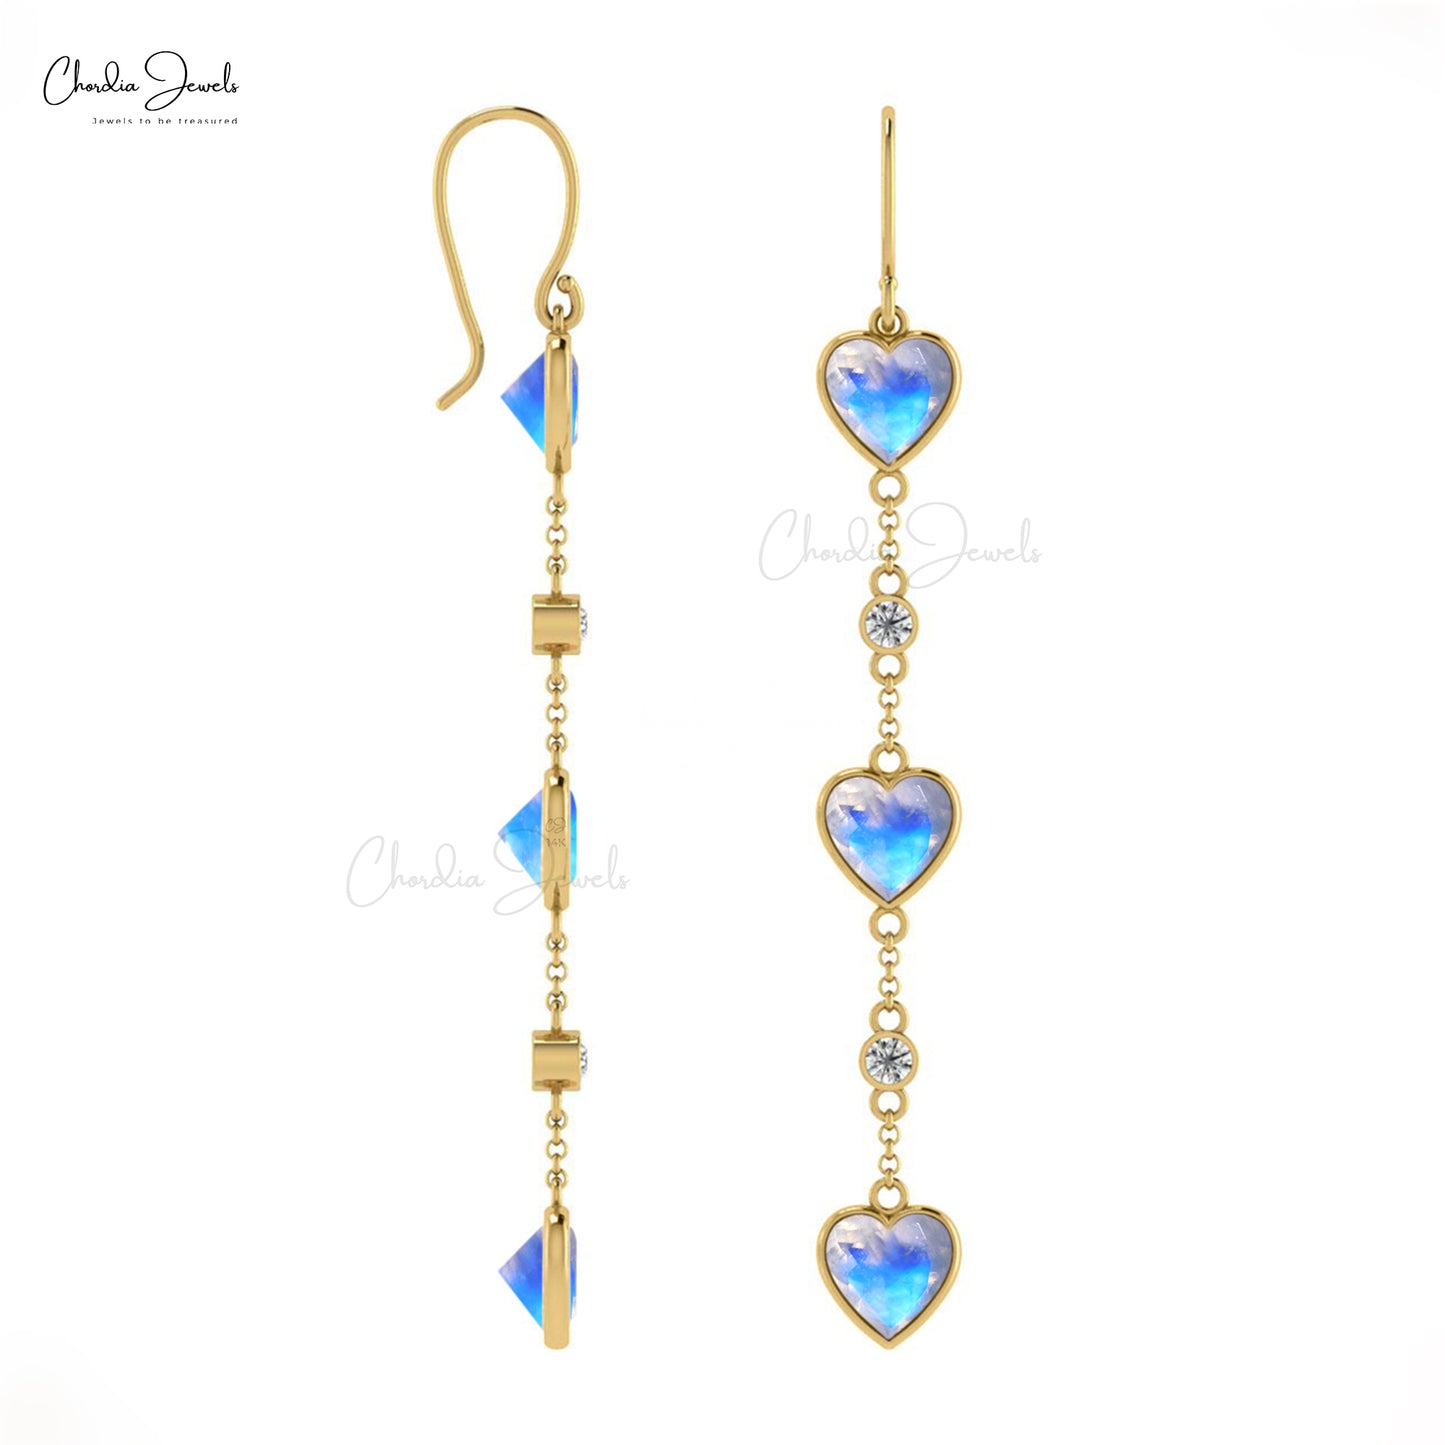 Dangling Heart Earrings With Rainbow Moonstone 14k Real Gold Diamond Studded Earring